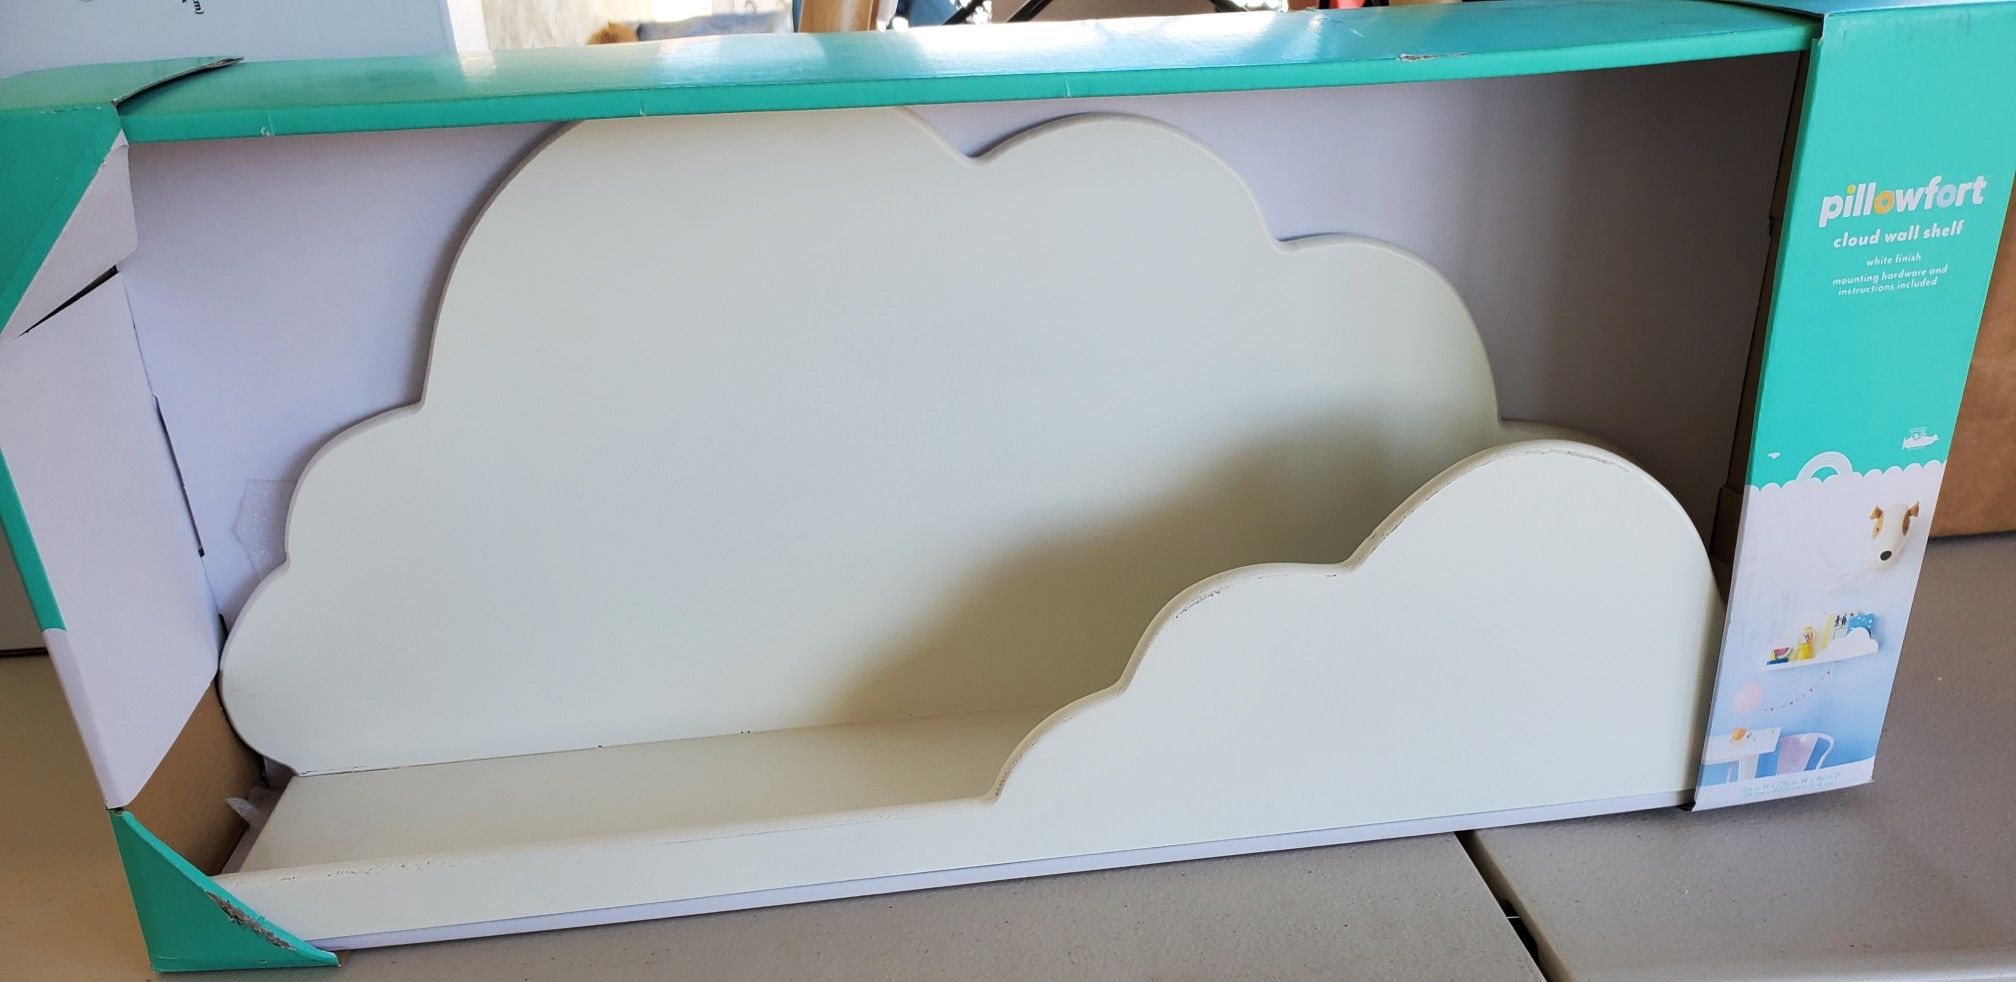 Pillowfort Cloud Decorative Wall Shelf